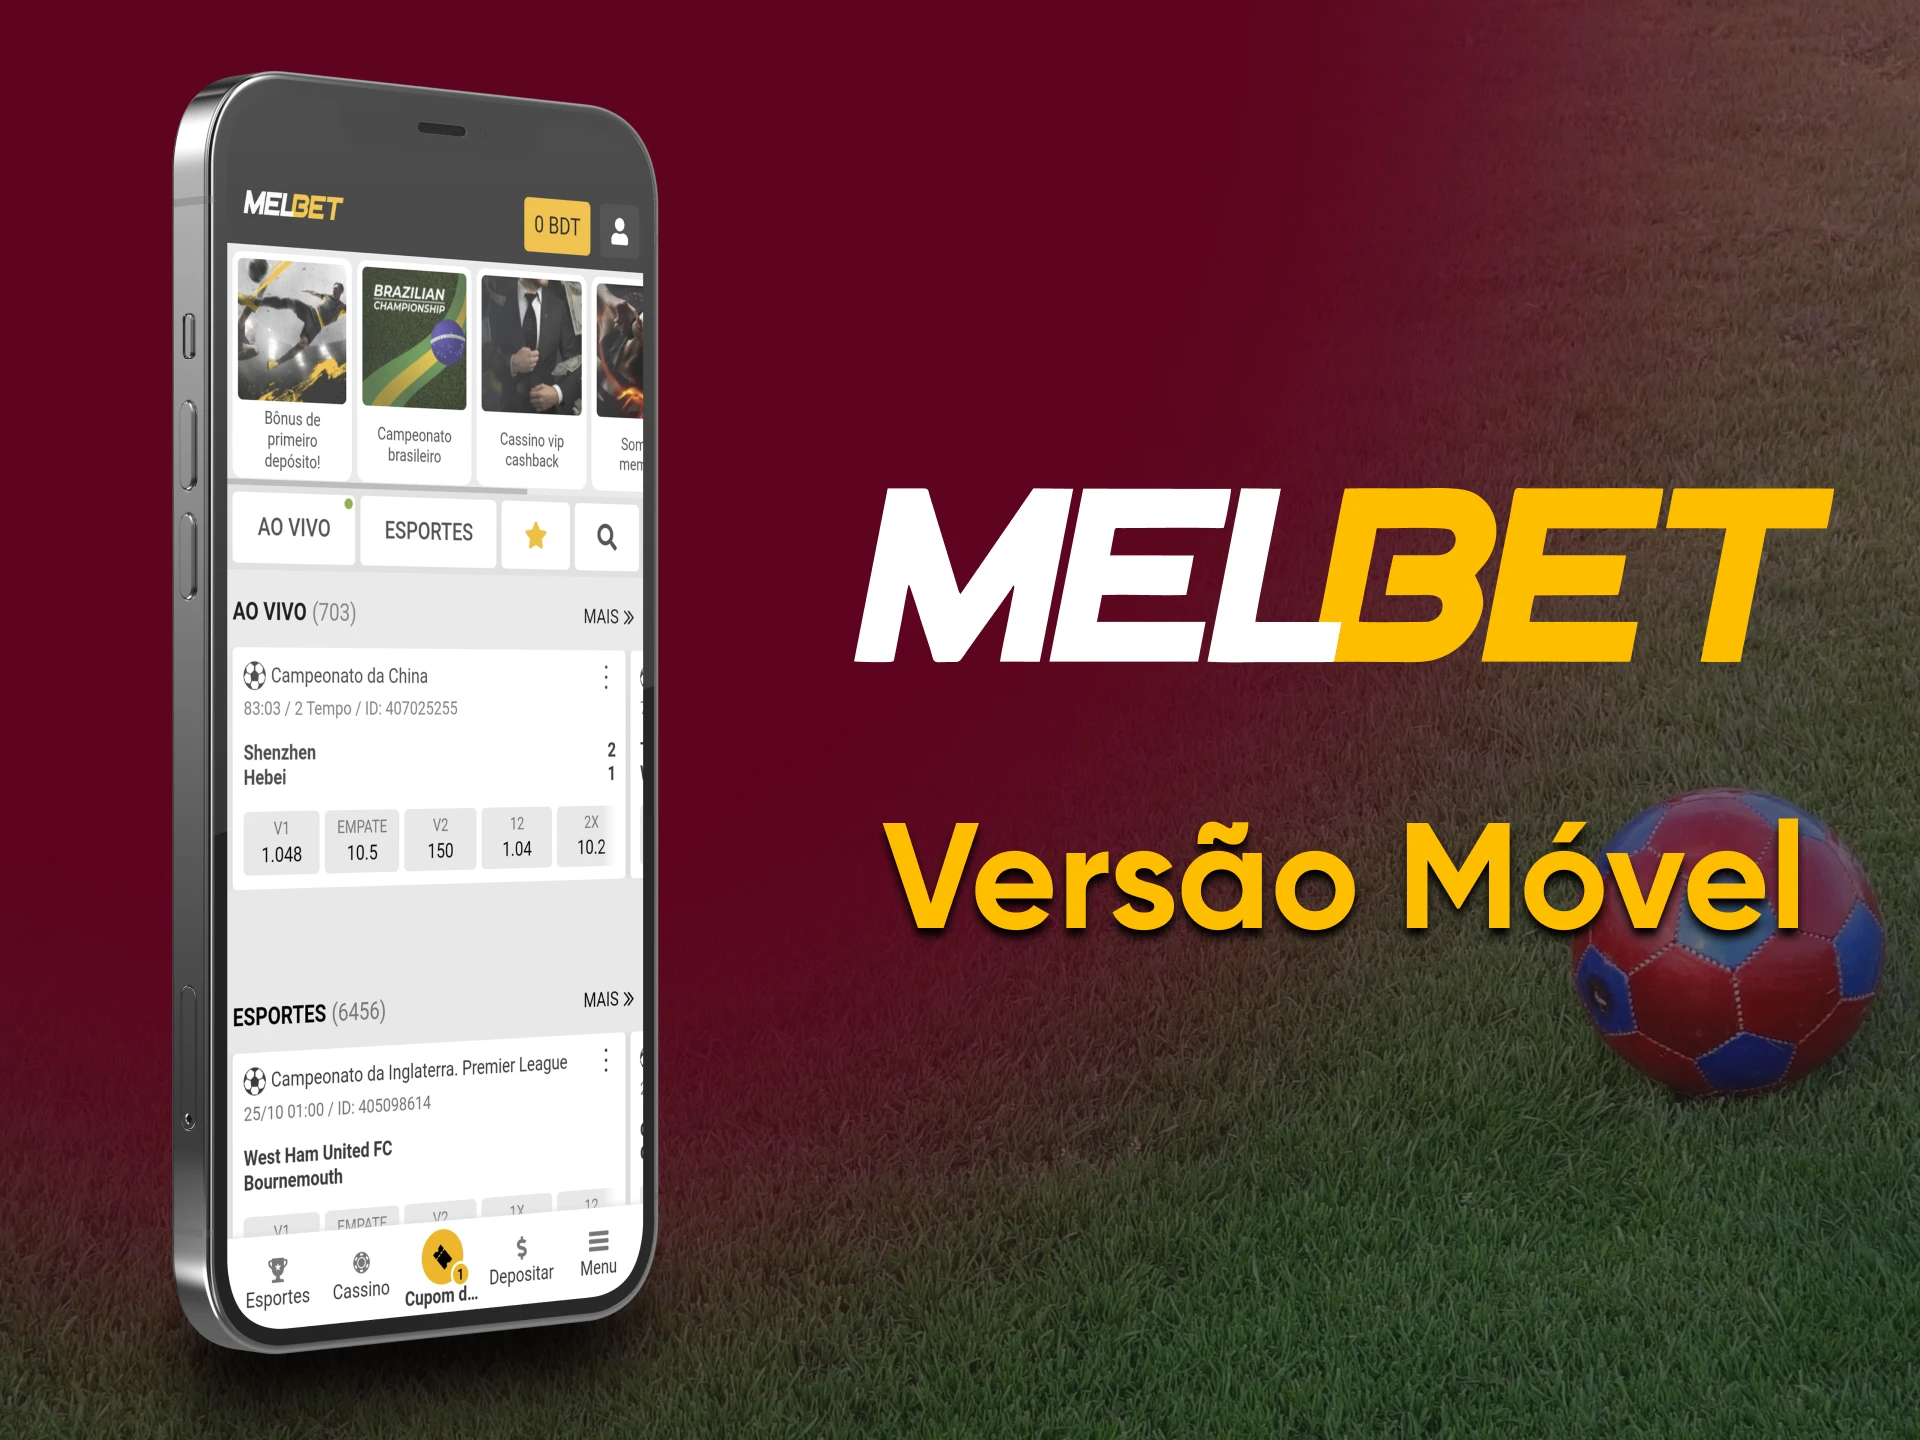 The Melbet platform has a web version of the website.